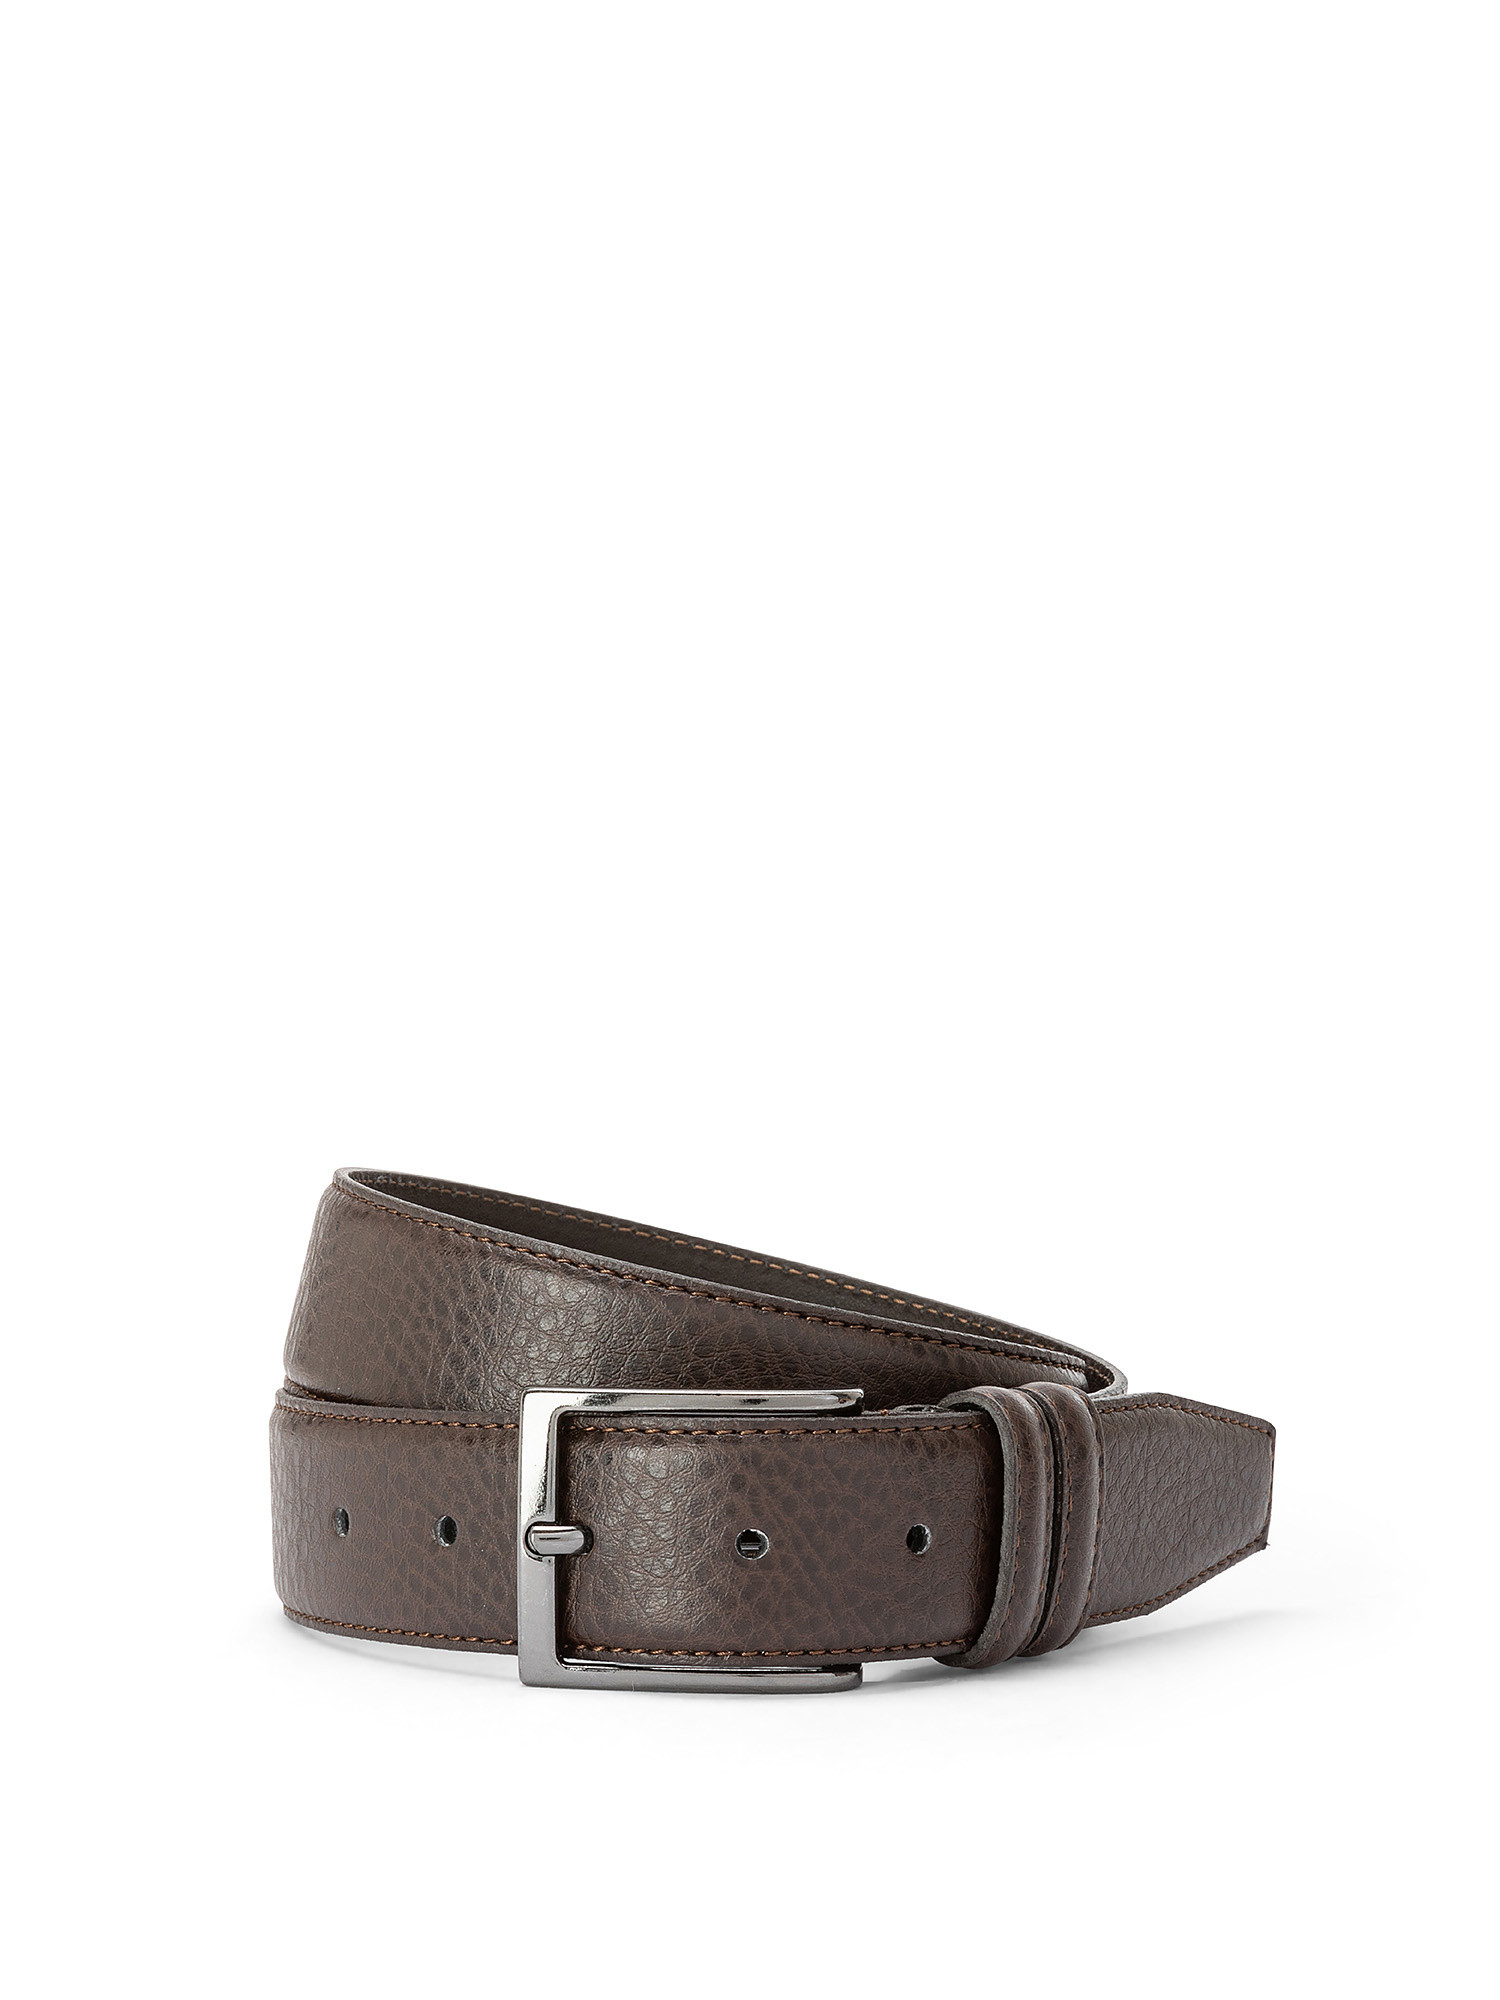 Luca D'Altieri - Leather belt, Dark Brown, large image number 0